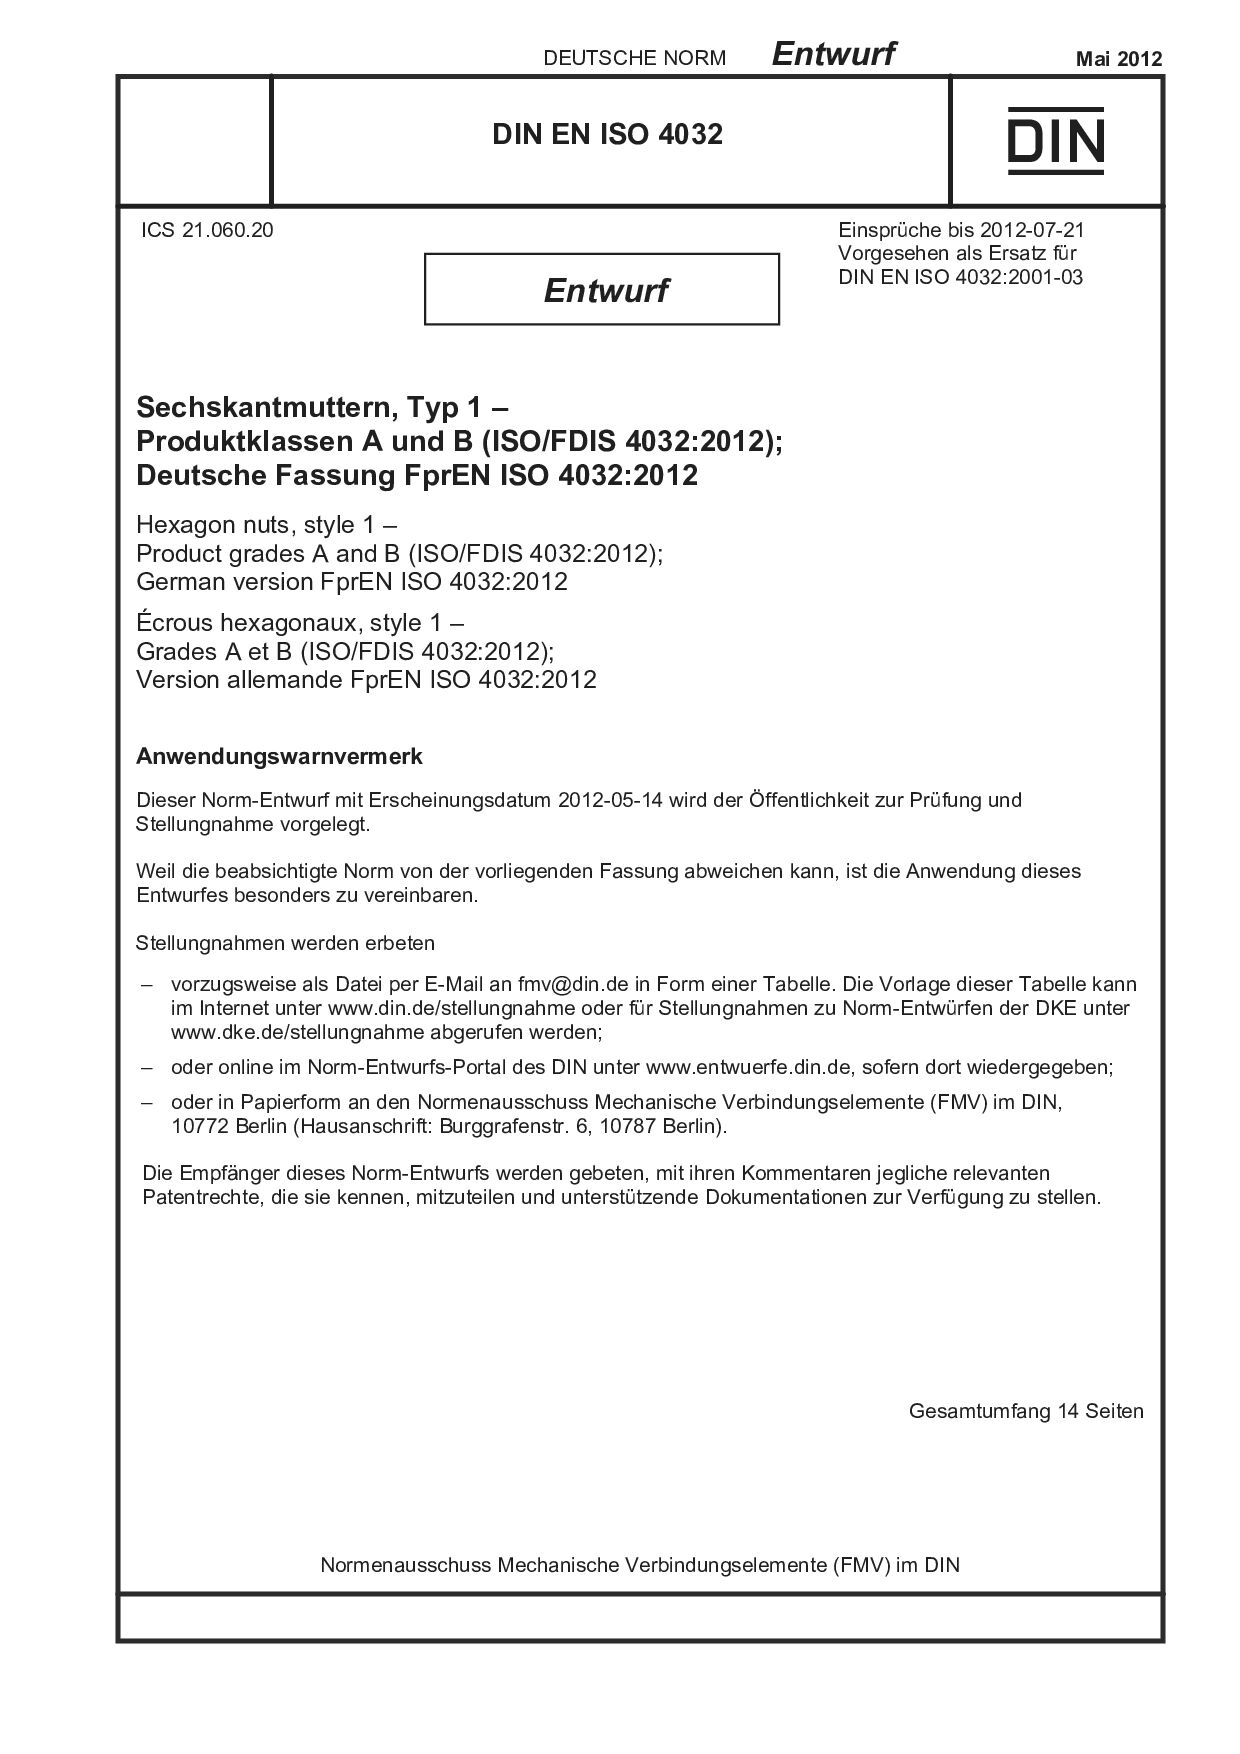 DIN EN ISO 4032 E:2012-05